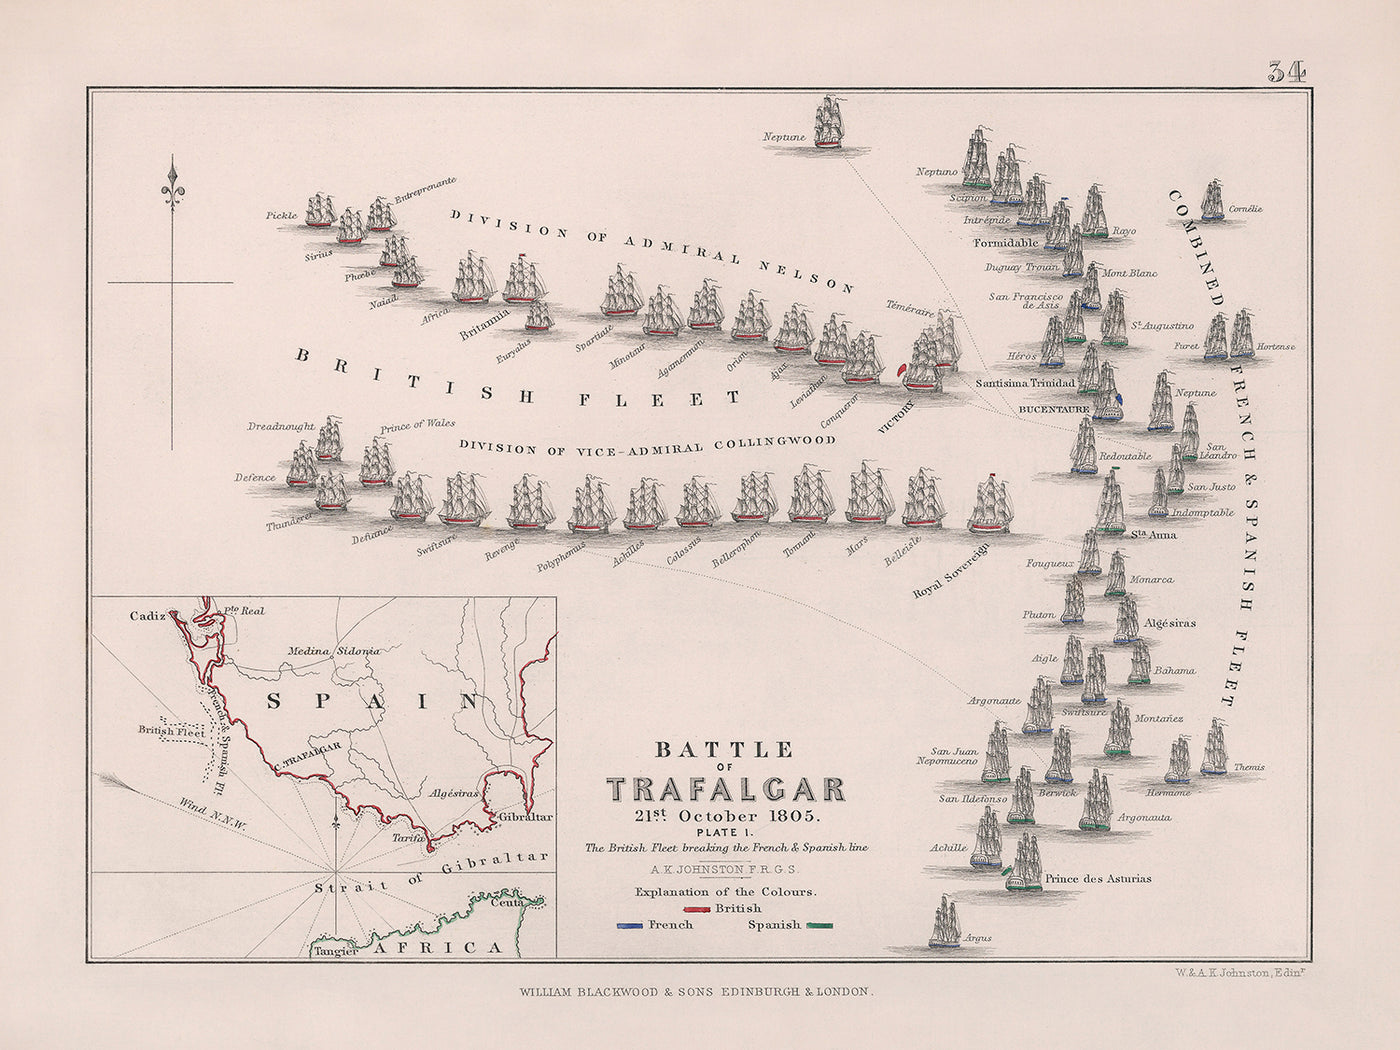 Battle of Trafalgar: The British Fleet breaking the French and Spanish line by AK Johnston, 1852